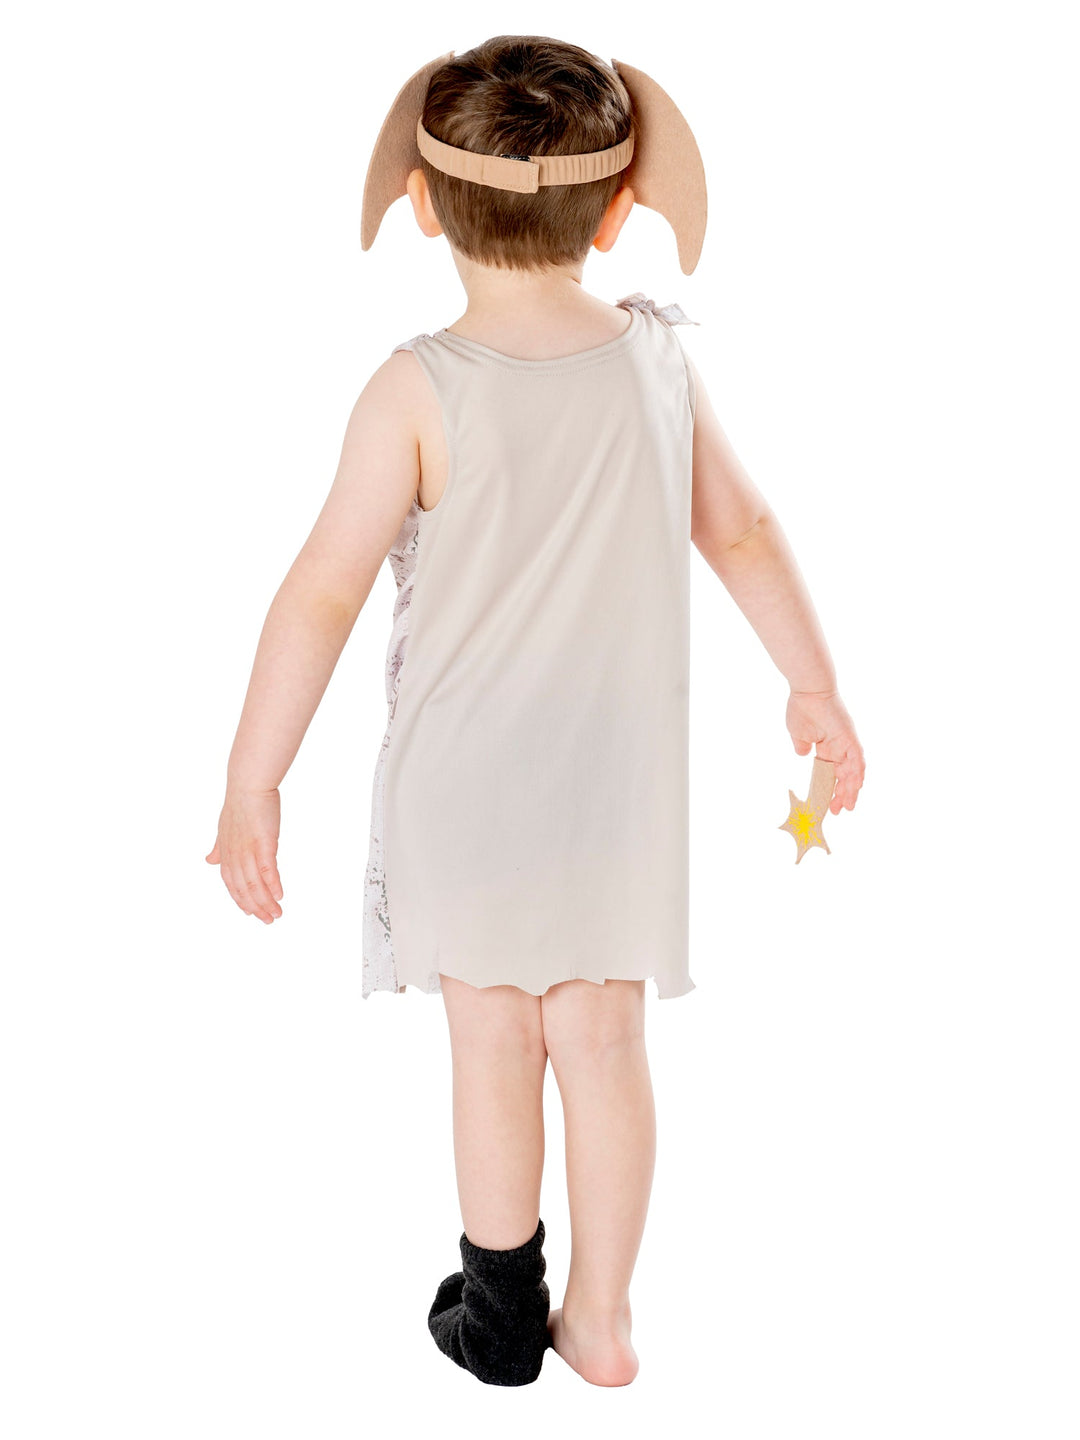 Dobby Costume Child Harry Potter Elf